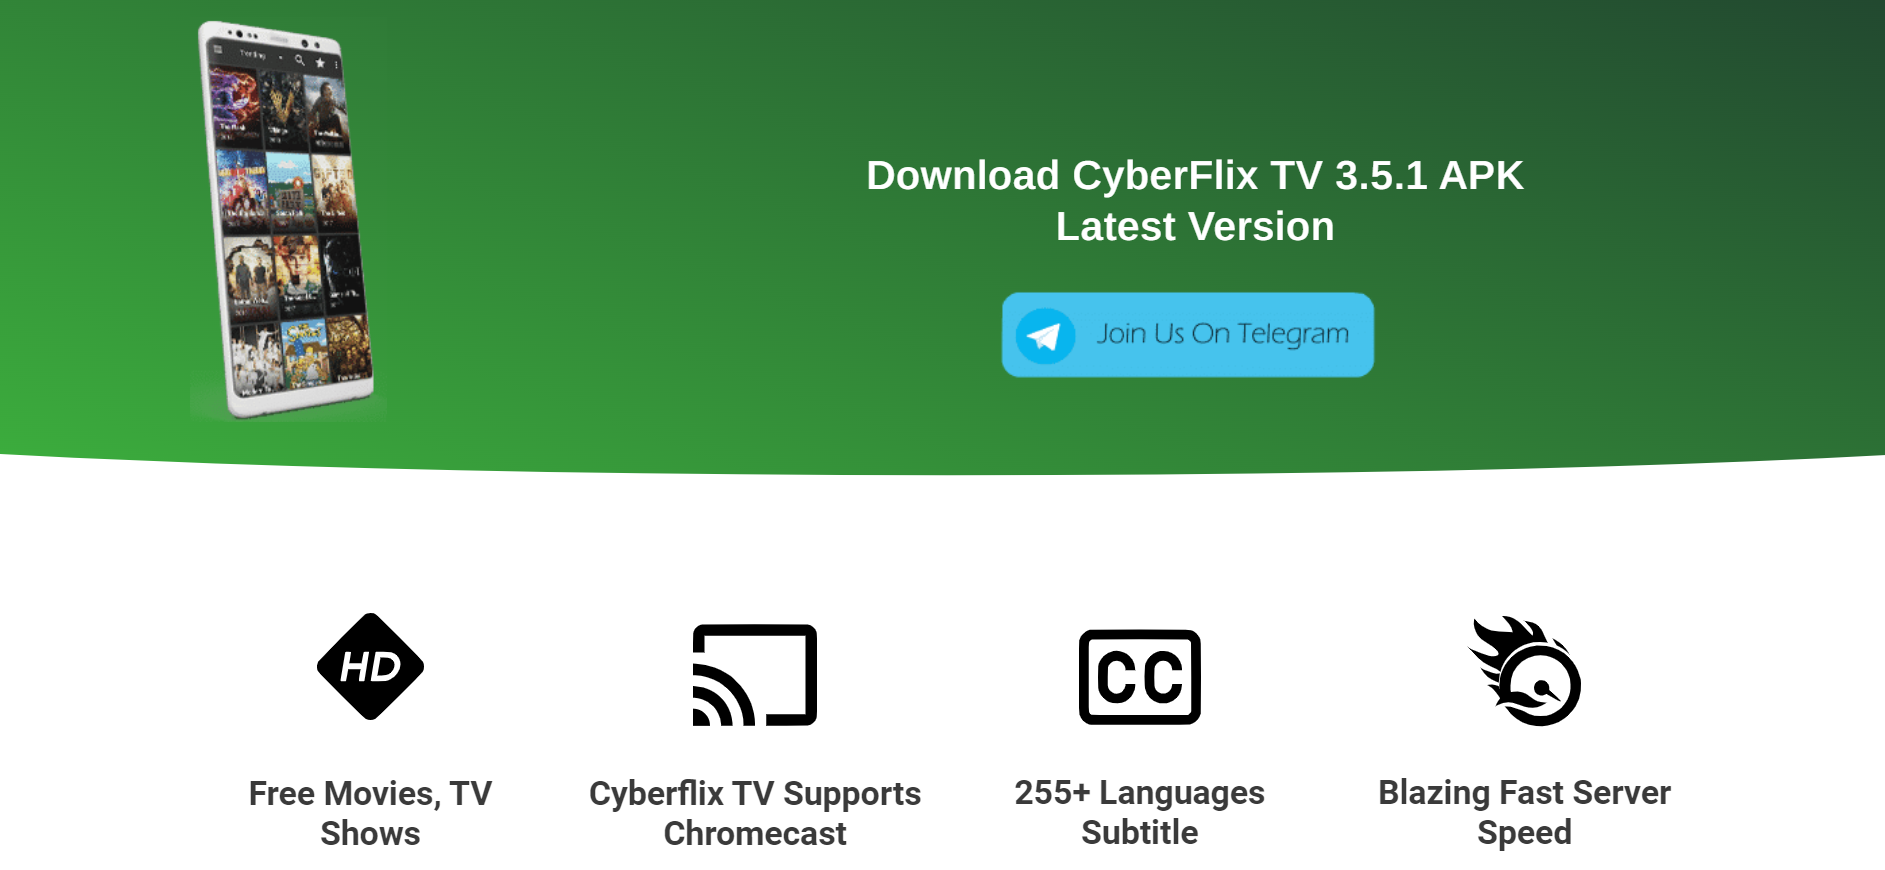 Can I watch Cyberflix TV legally?